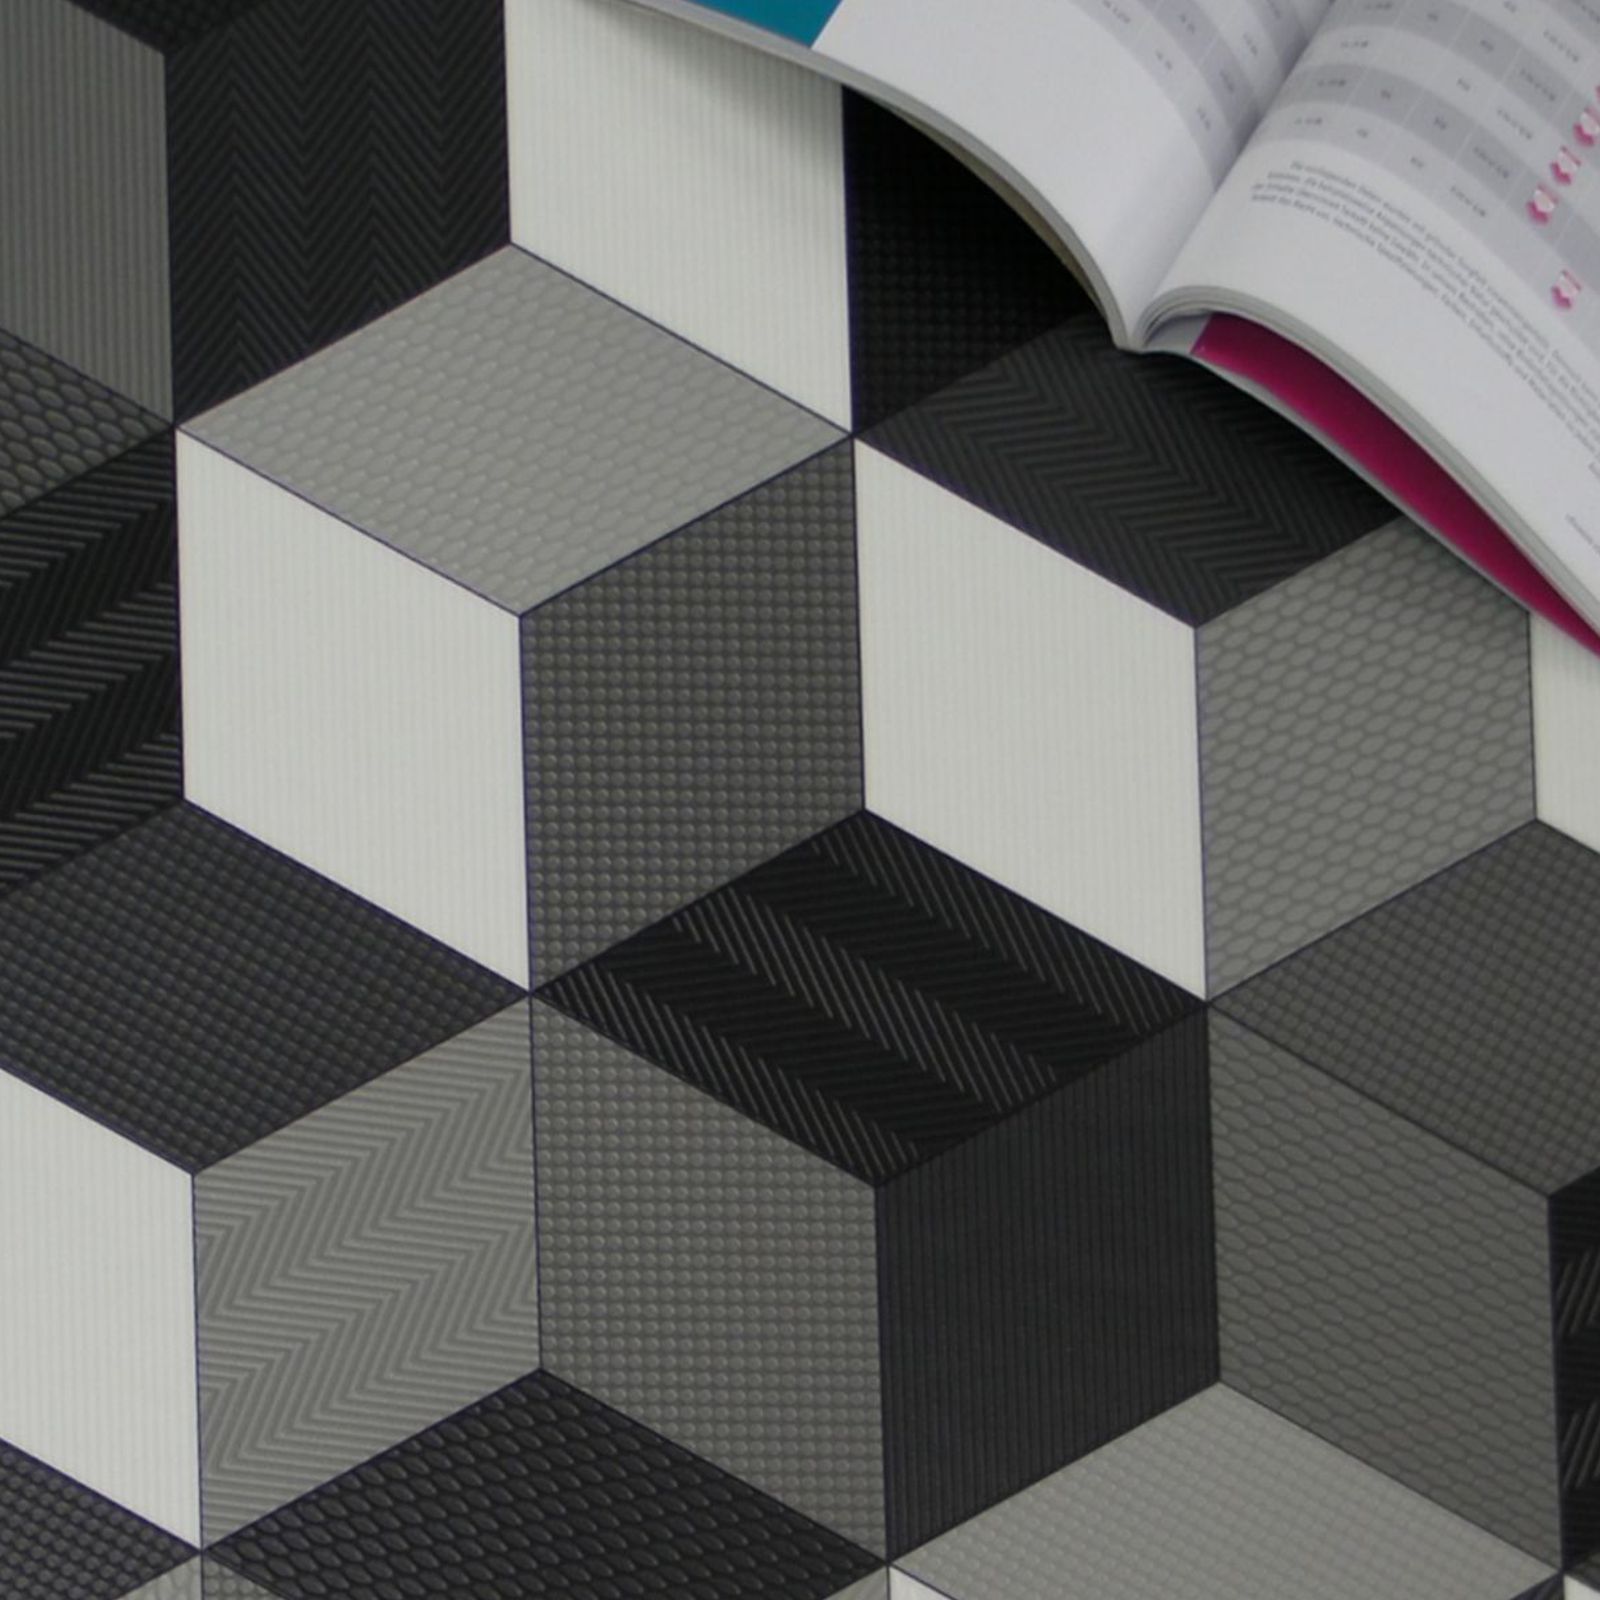 PVC Bodenbelag Cube 3D Würfel Schwarz Weiß Grau - Länge 30 Meter